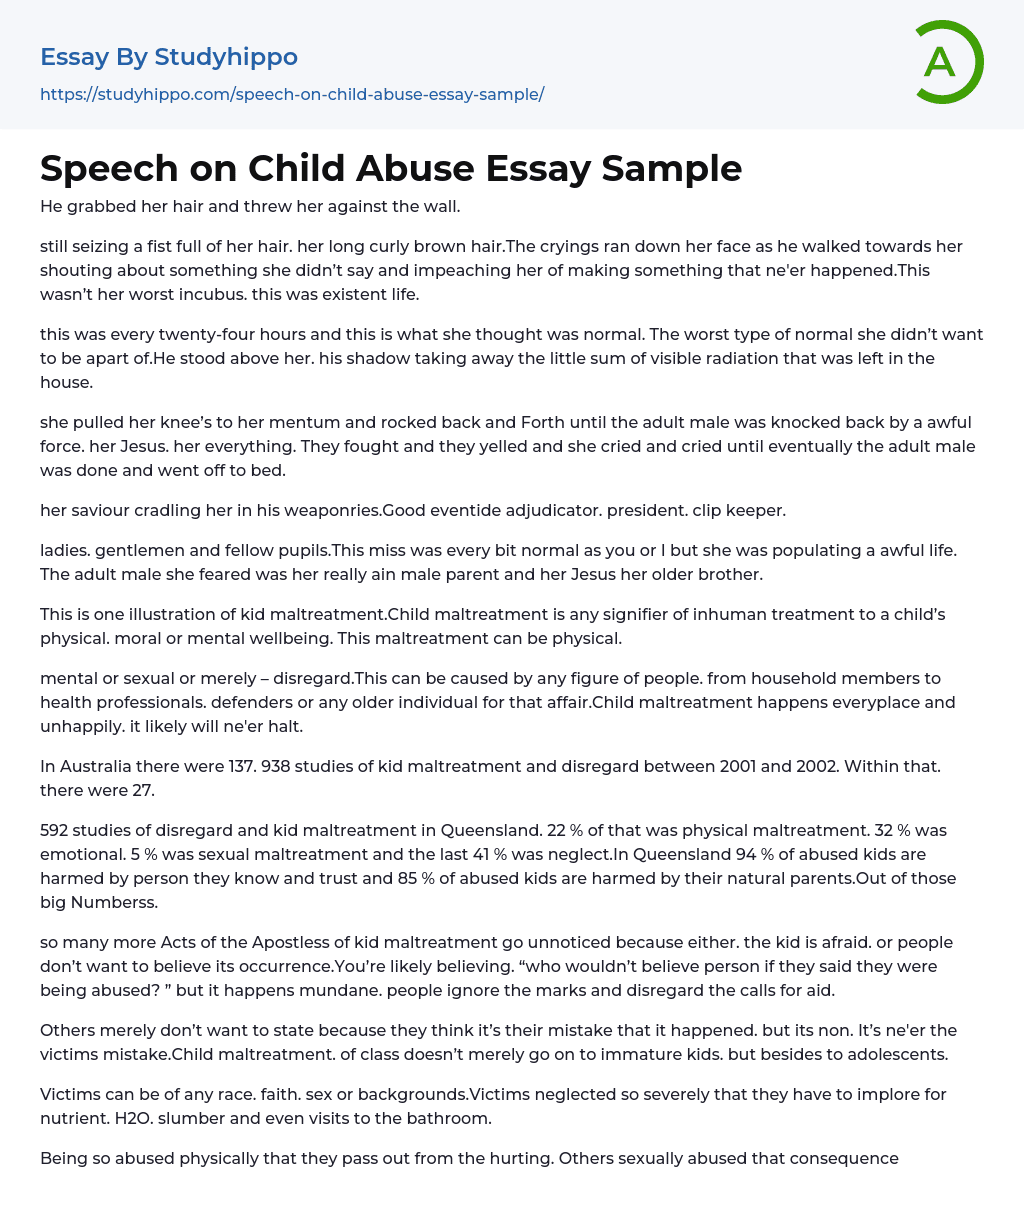 Speech on Child Abuse Essay Sample